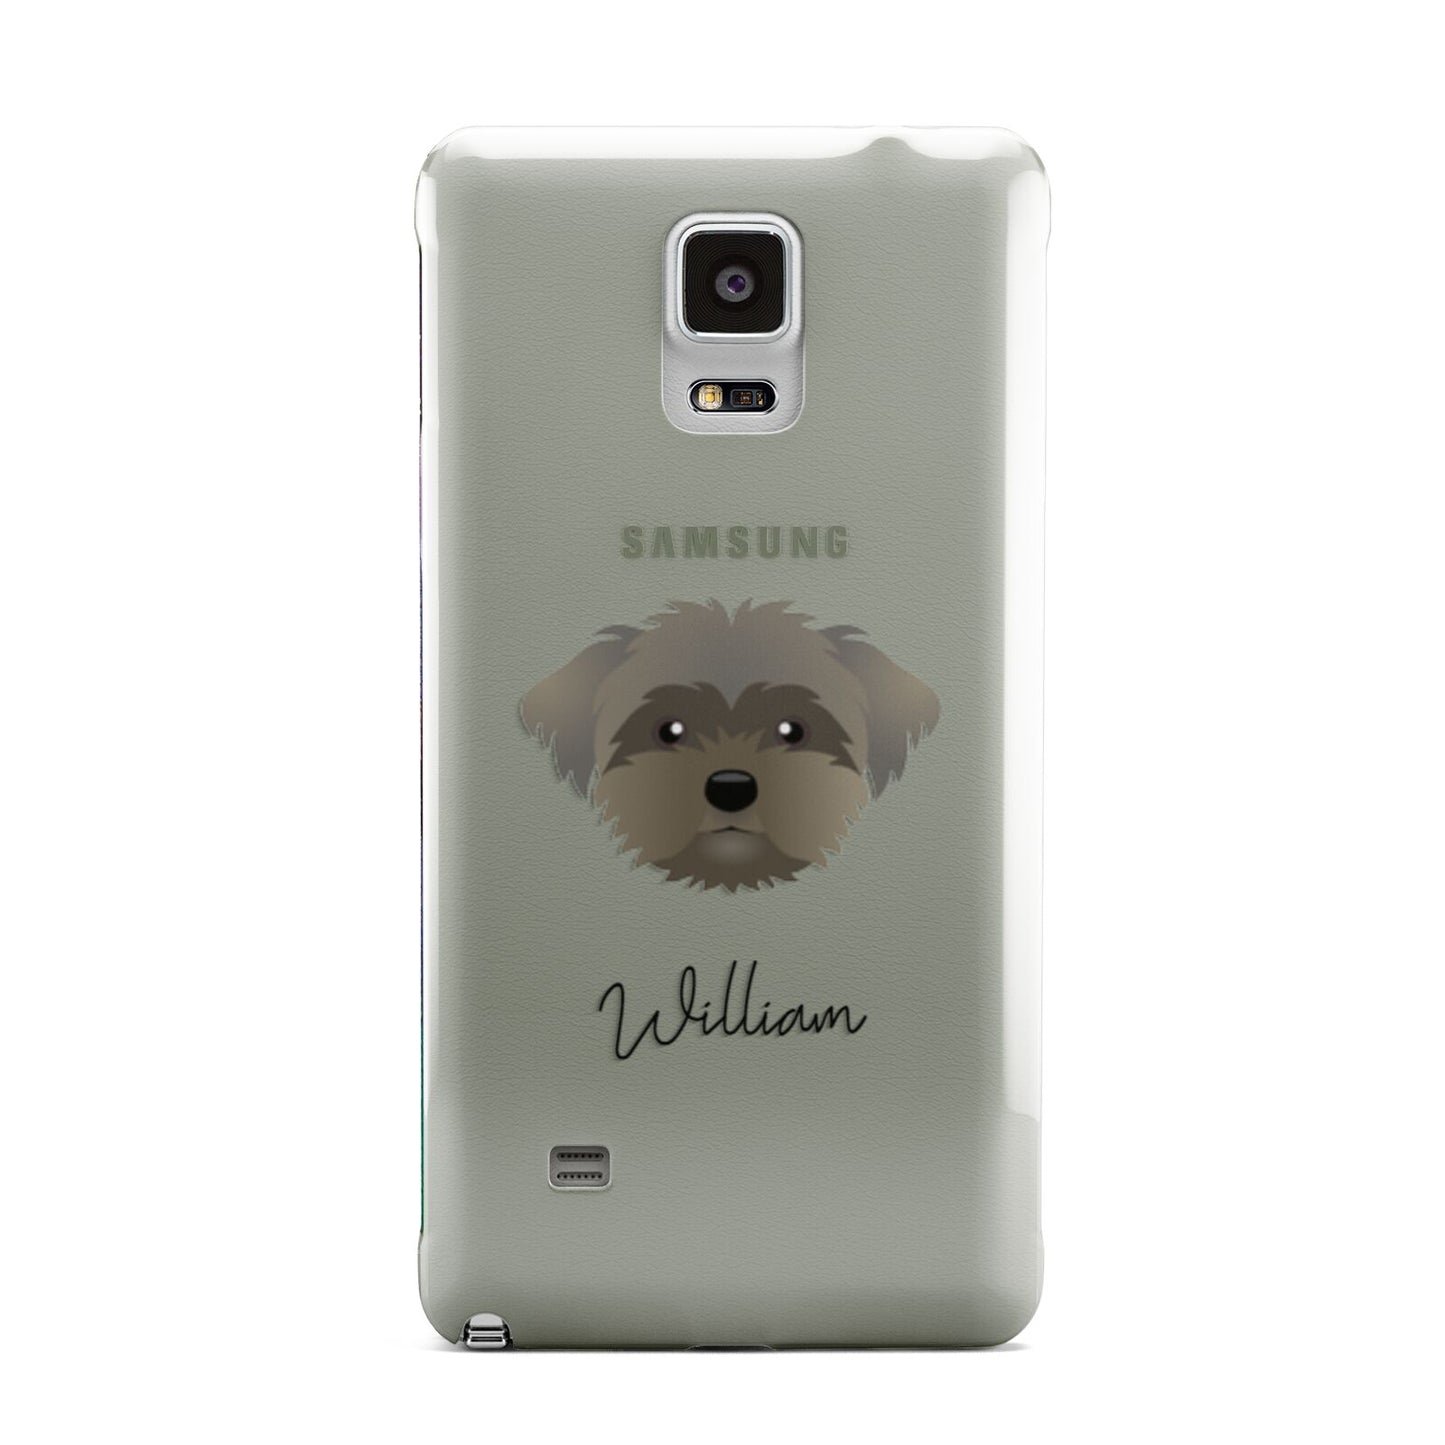 Peek a poo Personalised Samsung Galaxy Note 4 Case